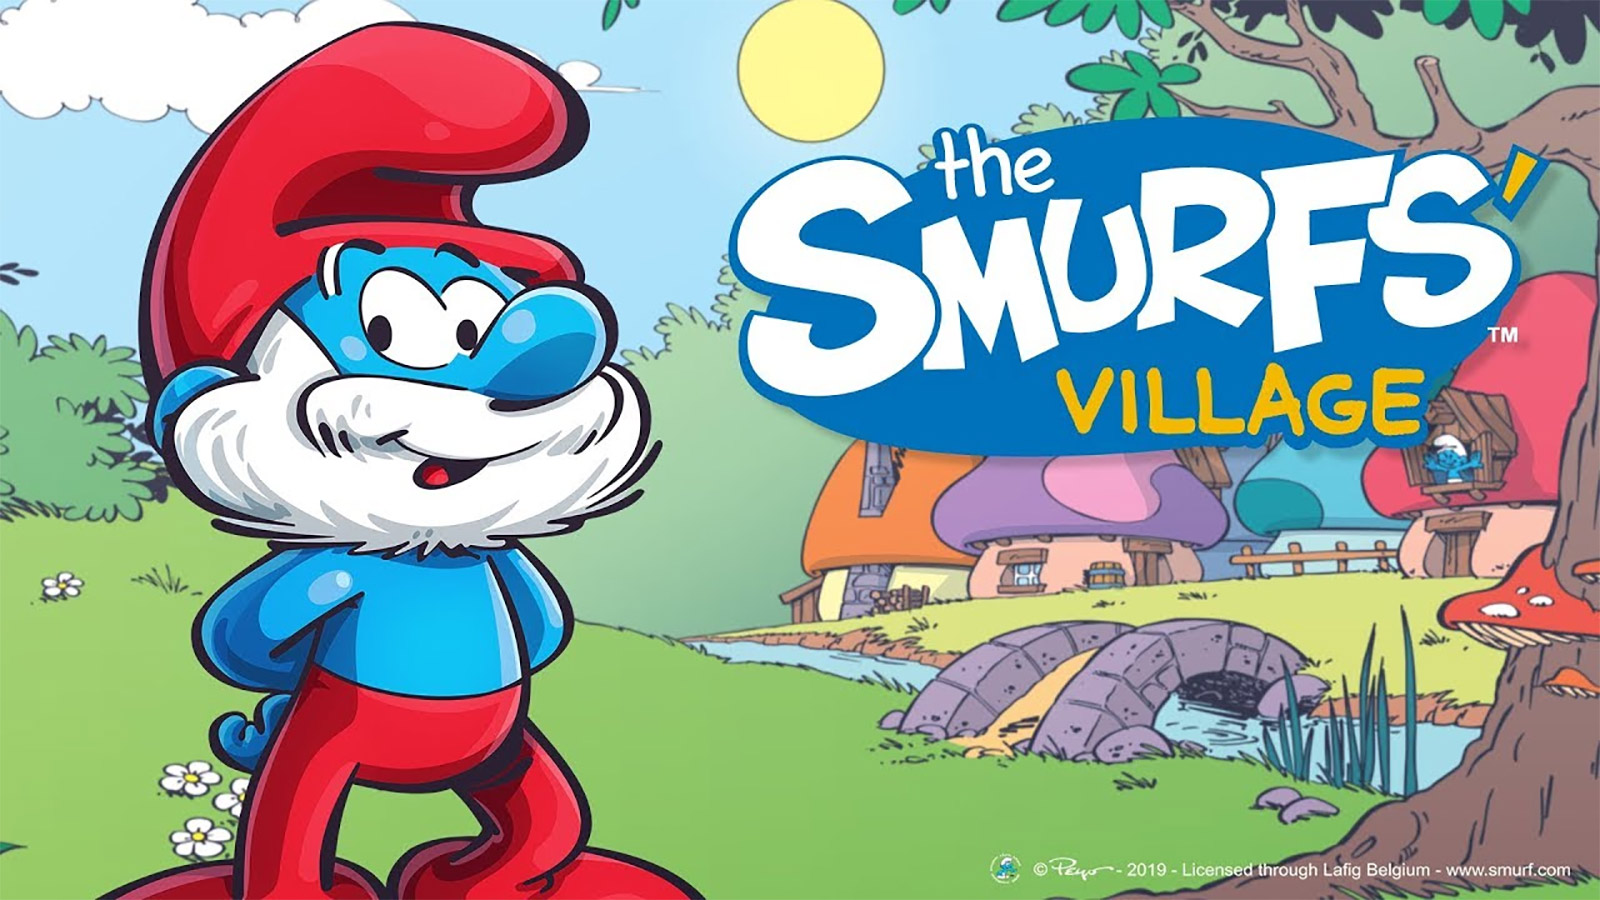 Smurfs' Village Mod Apk 2.17.0 (Unlimited Money)